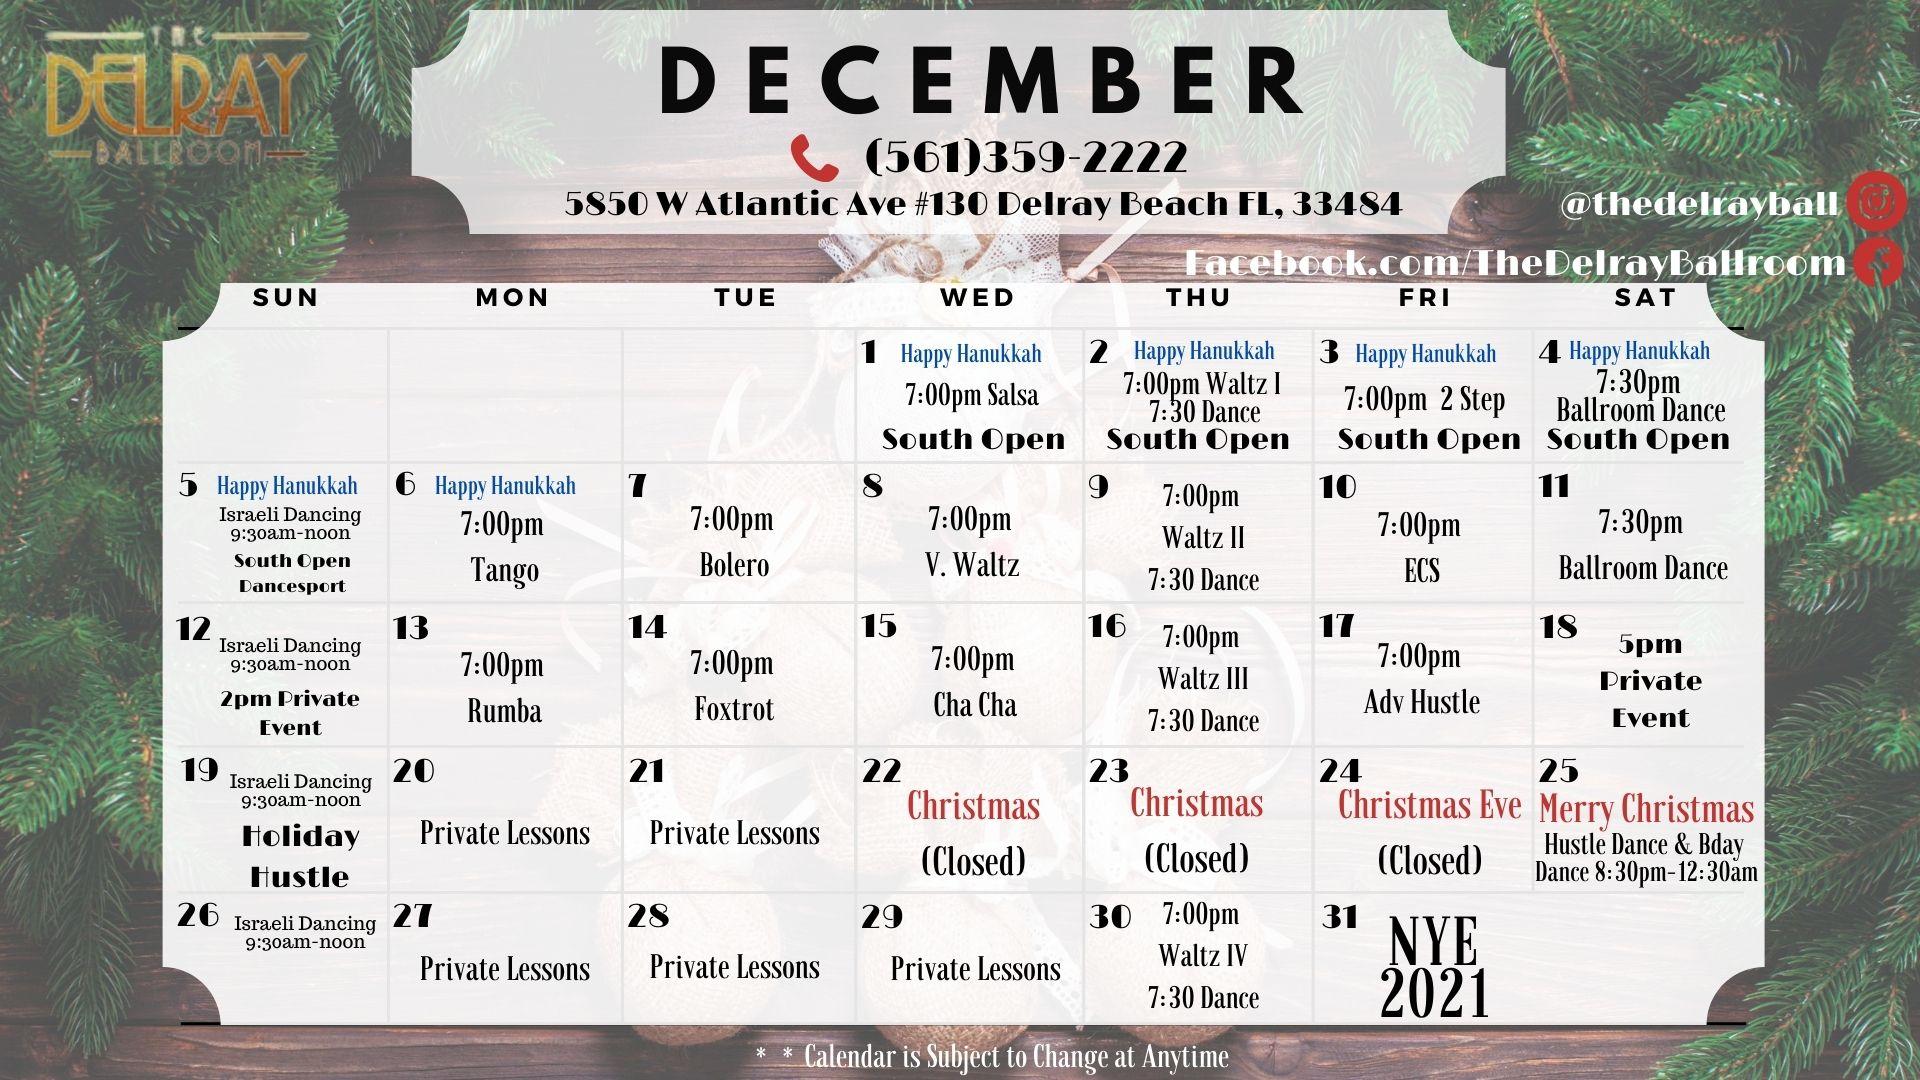 November 2021 Calendar of Events